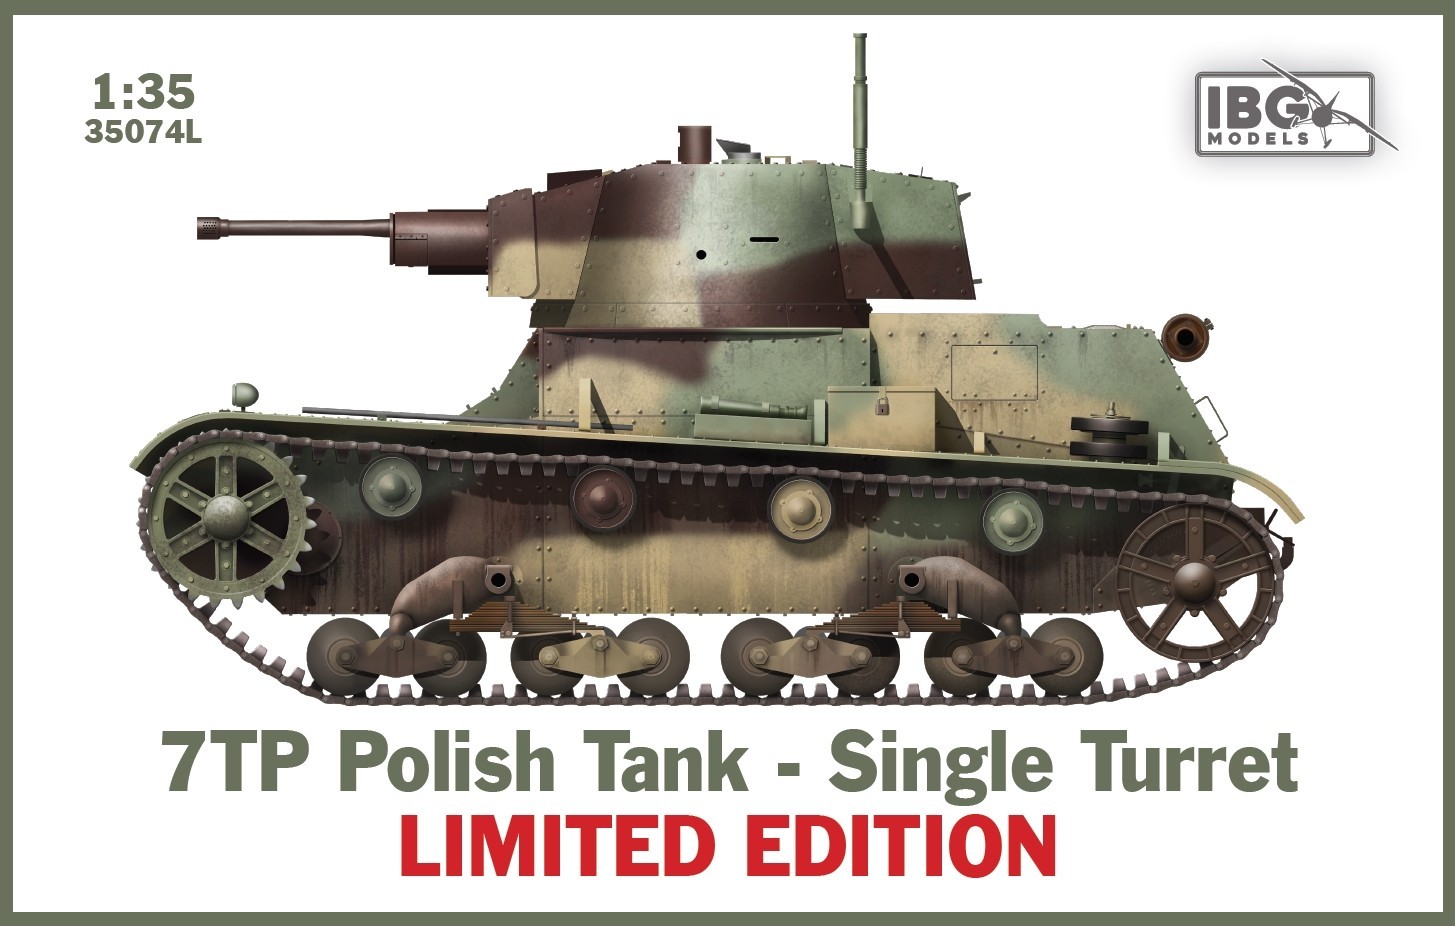 7TP Polish Tank - Single Turret LIMITED EDITION (includes Miniart Polish Tank Crew Set and Master Model metal/resin barrel)